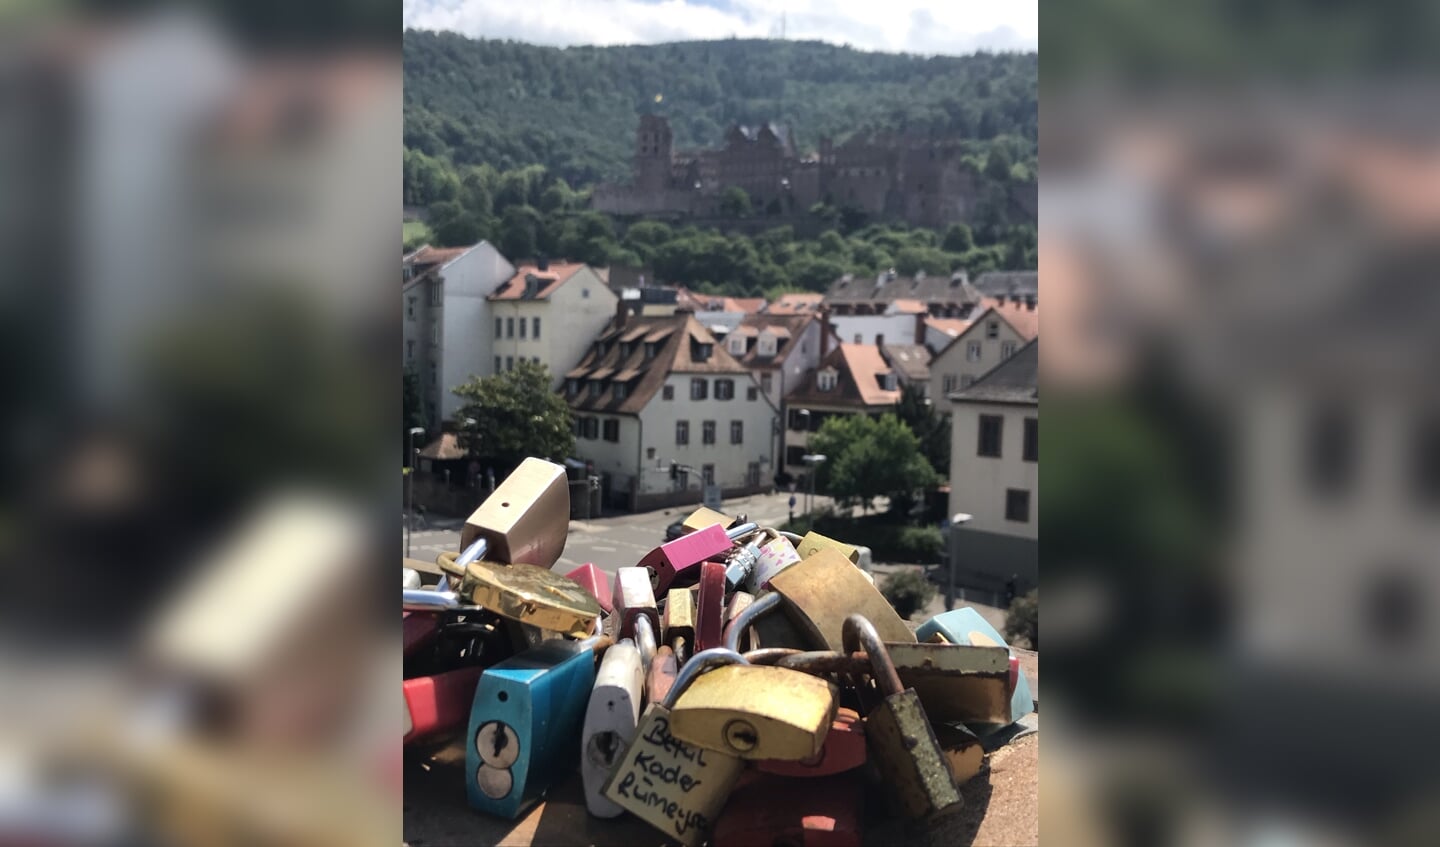 ,,Slot Heidelberg gezien vanaf de Oude Romeinse brug in Heidelberg, Duitsland.